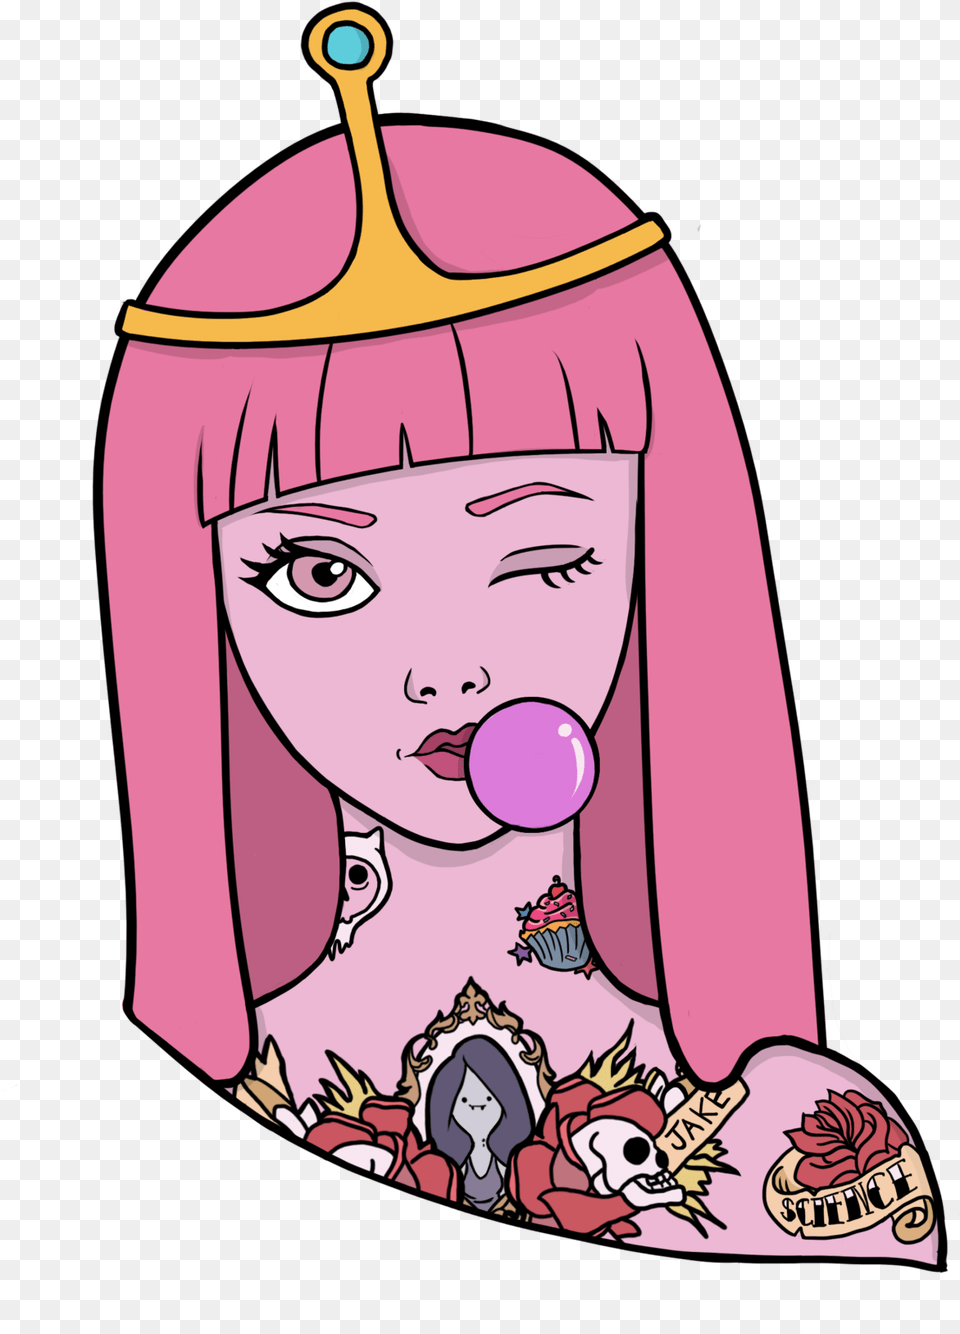 Princess Bubblegum Portrait By Guiganoide Features Prinzessin Bubblegum Adventure Tome, Person, Face, Head, Book Free Png Download